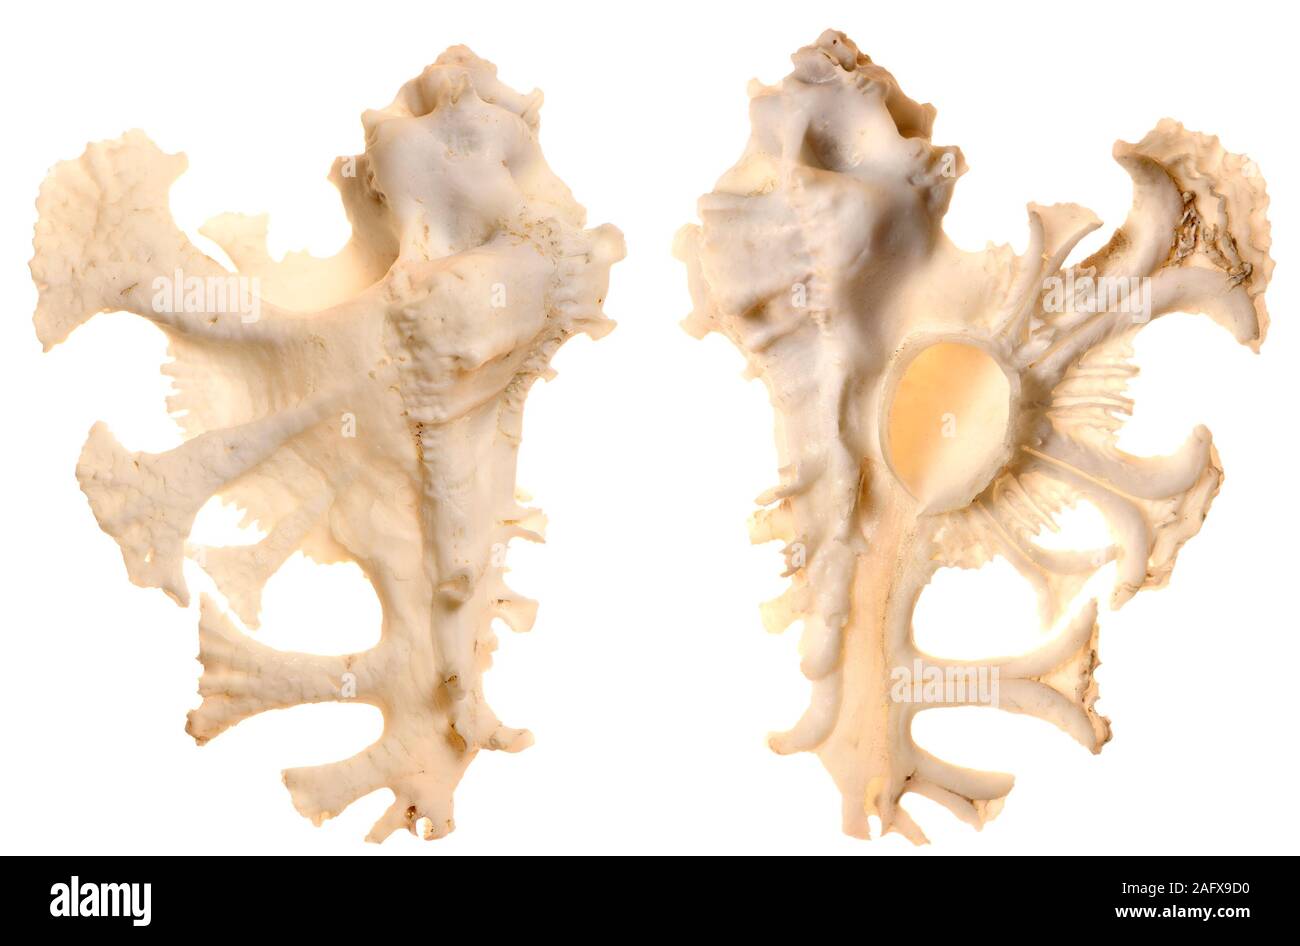 Anatomical Murex / Pele's Murex shell (Homalocantha anatomica) Stock Photo